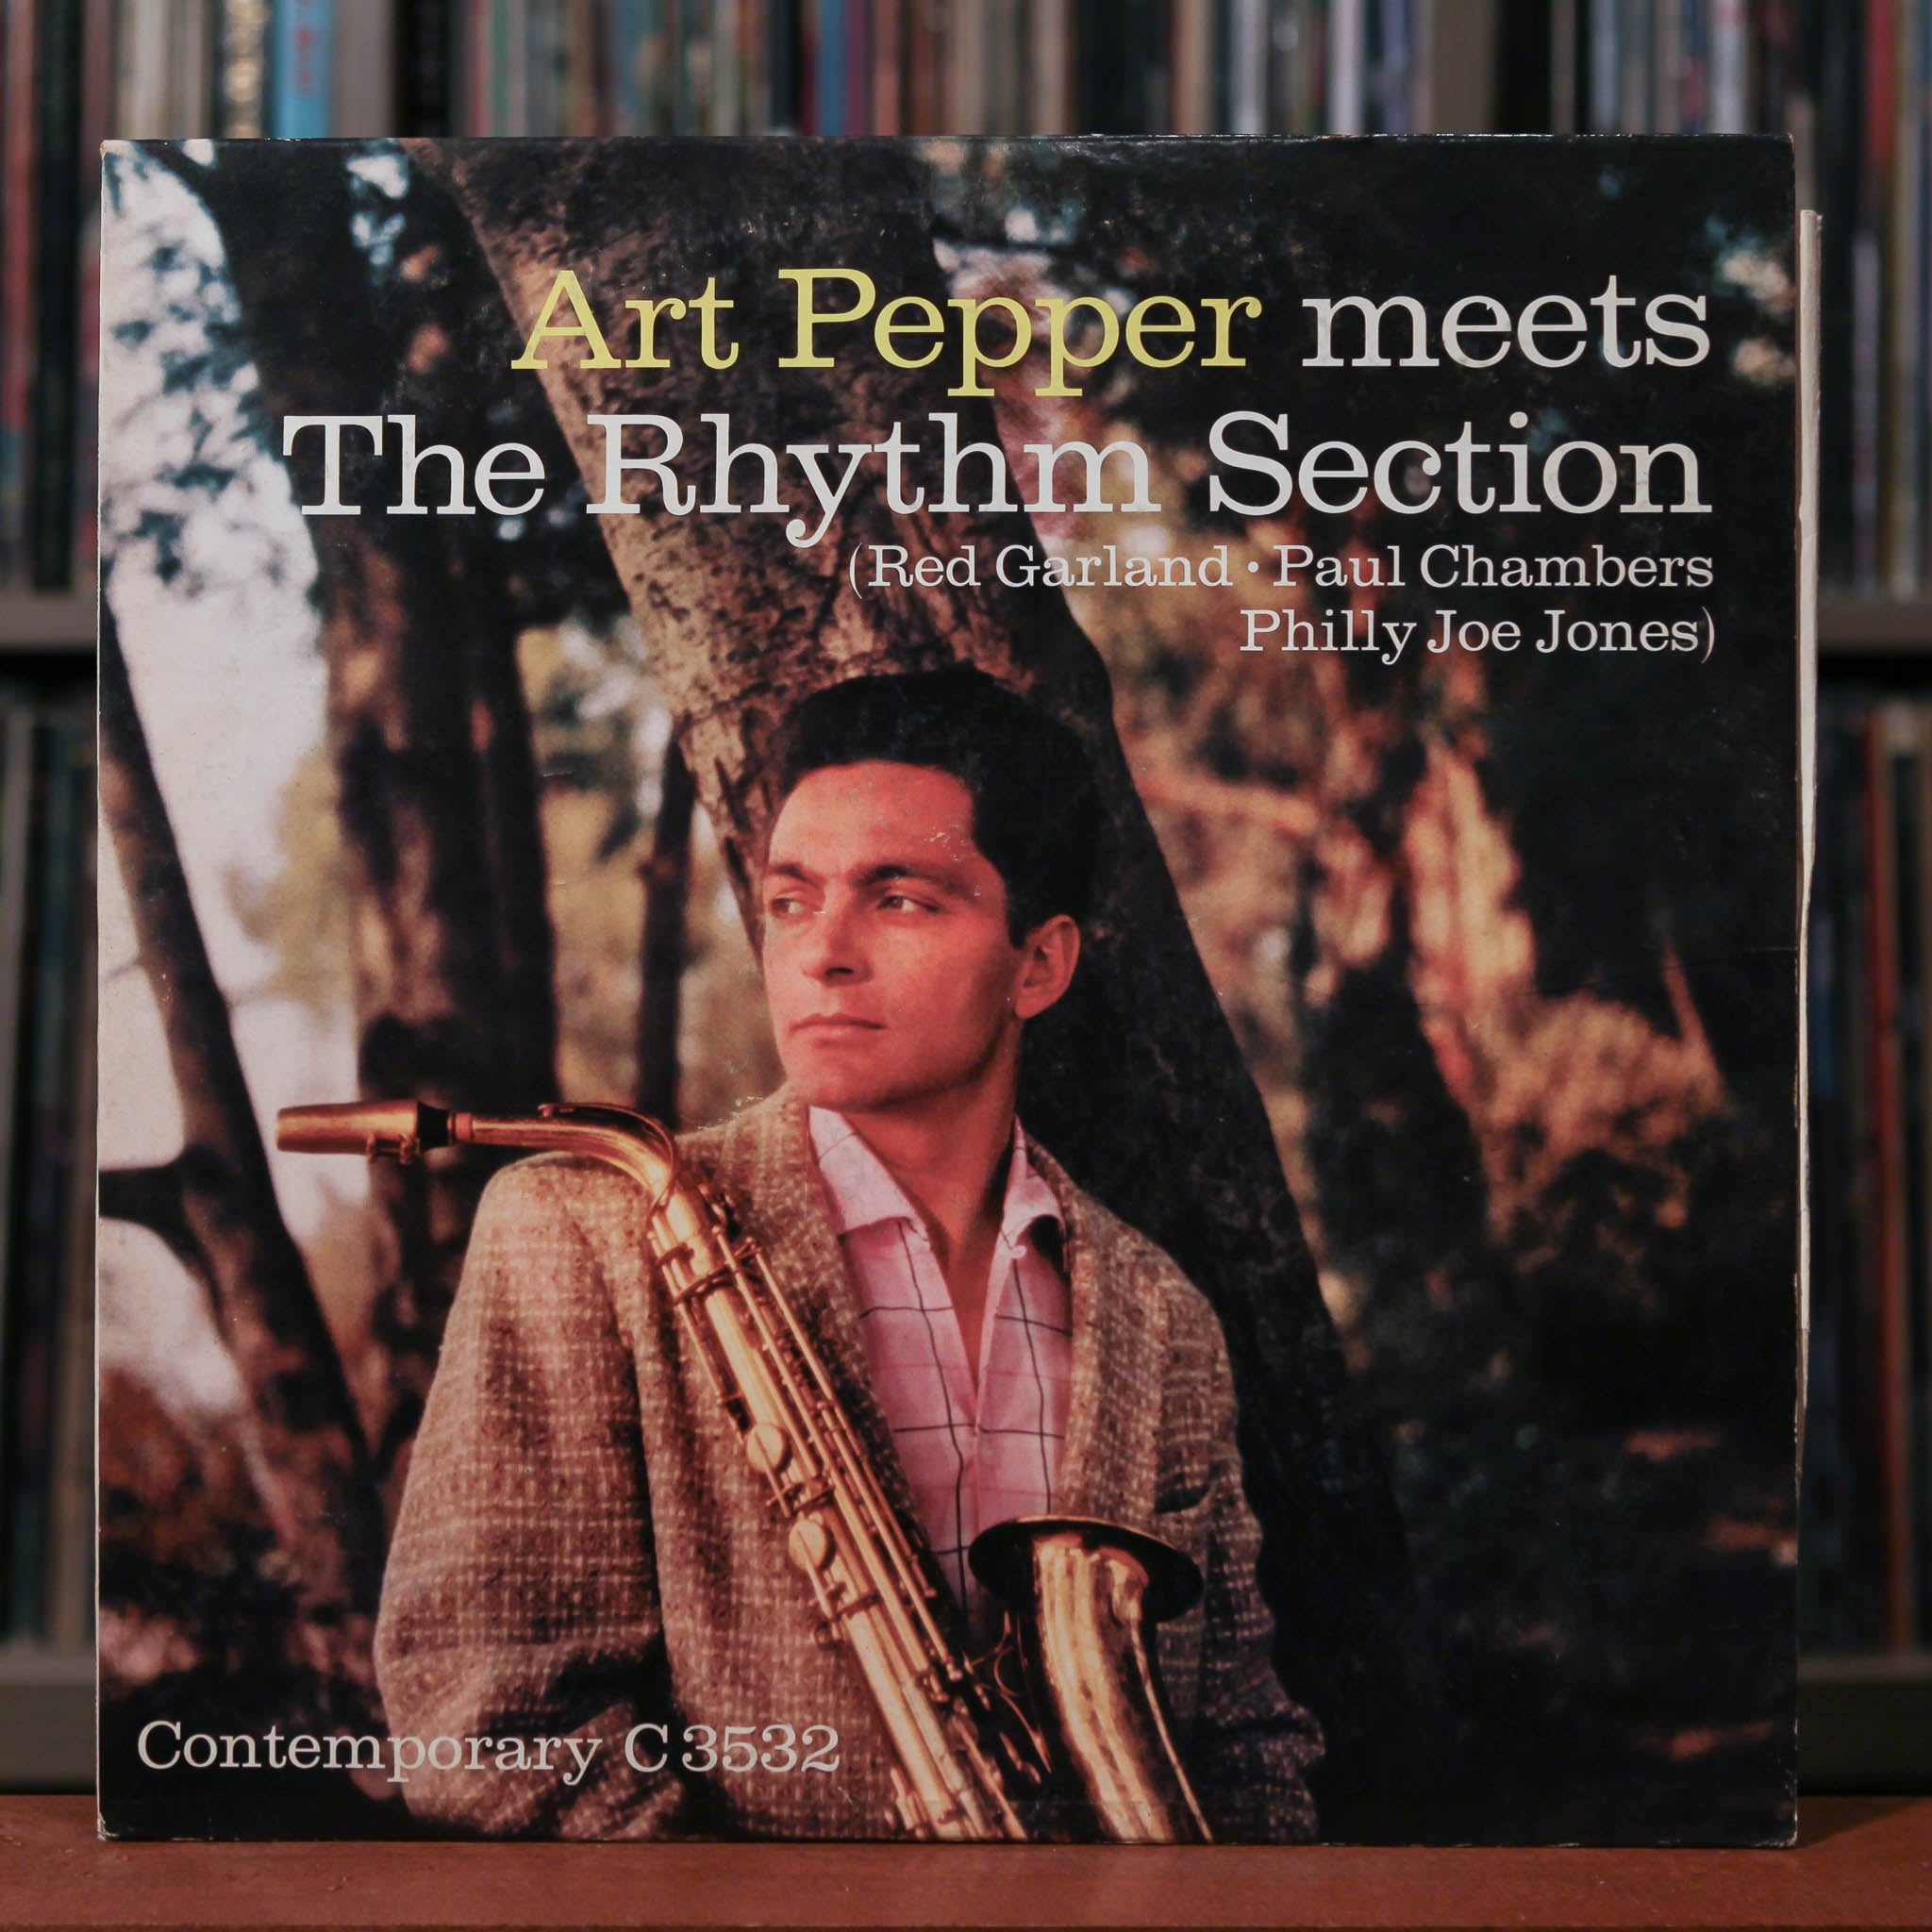 Art Pepper - Art Pepper Meets The Rhythm Section - 1957 Contemporary R